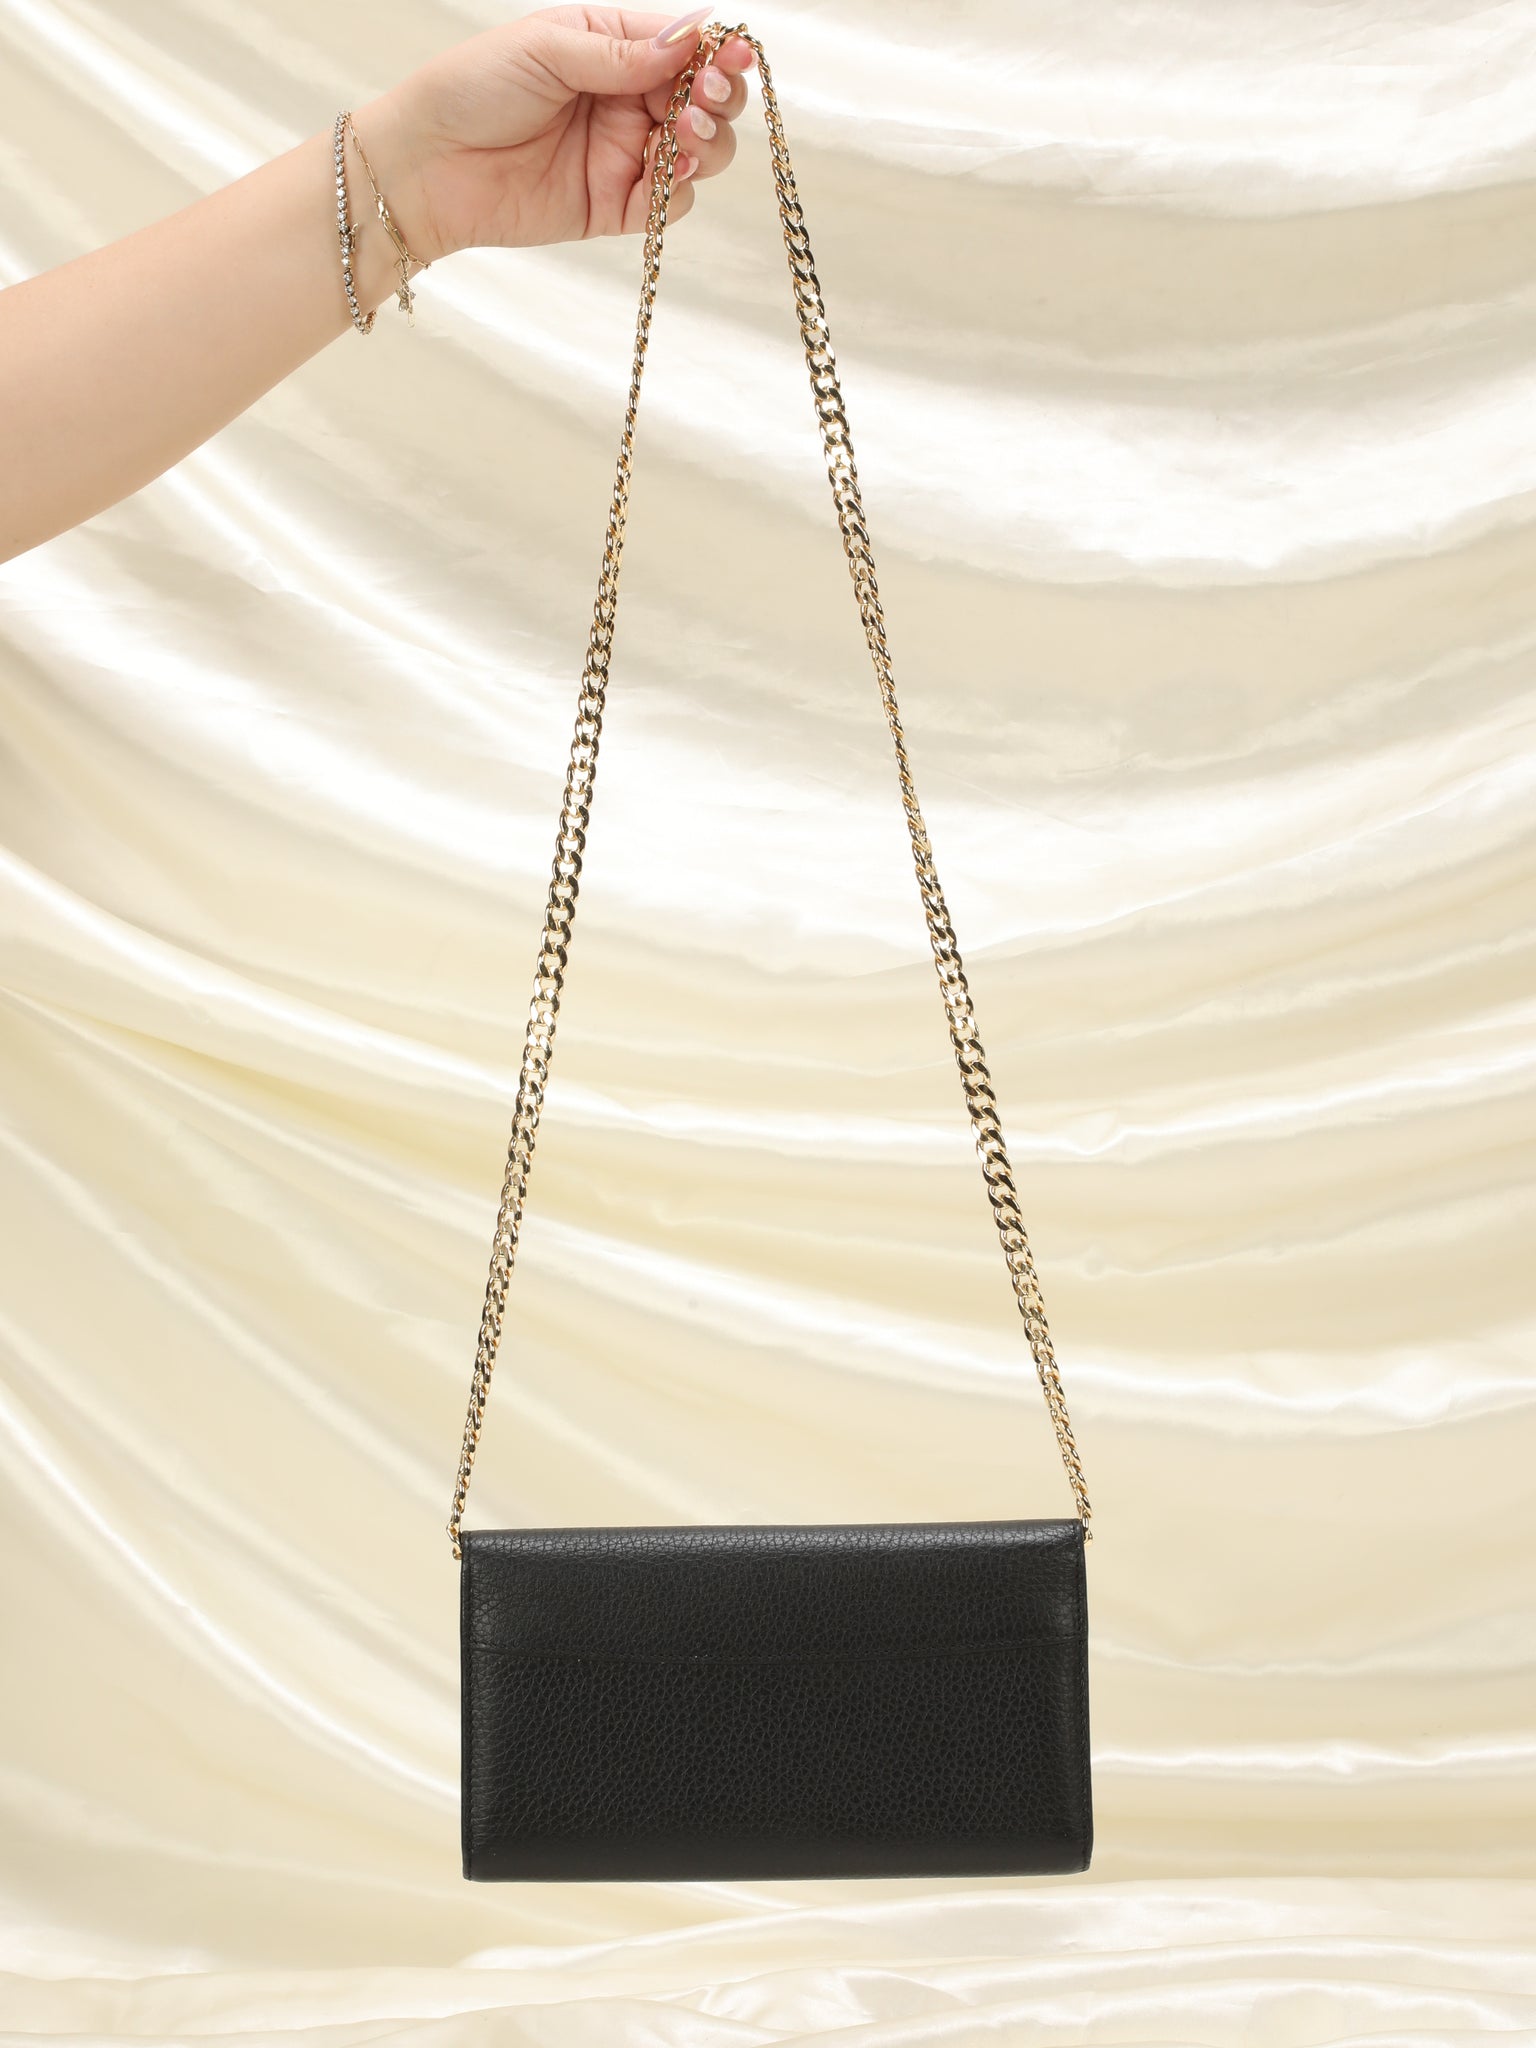 Authentic Louis Vuitton Capucines Wallet On Chain Crossbody Bag